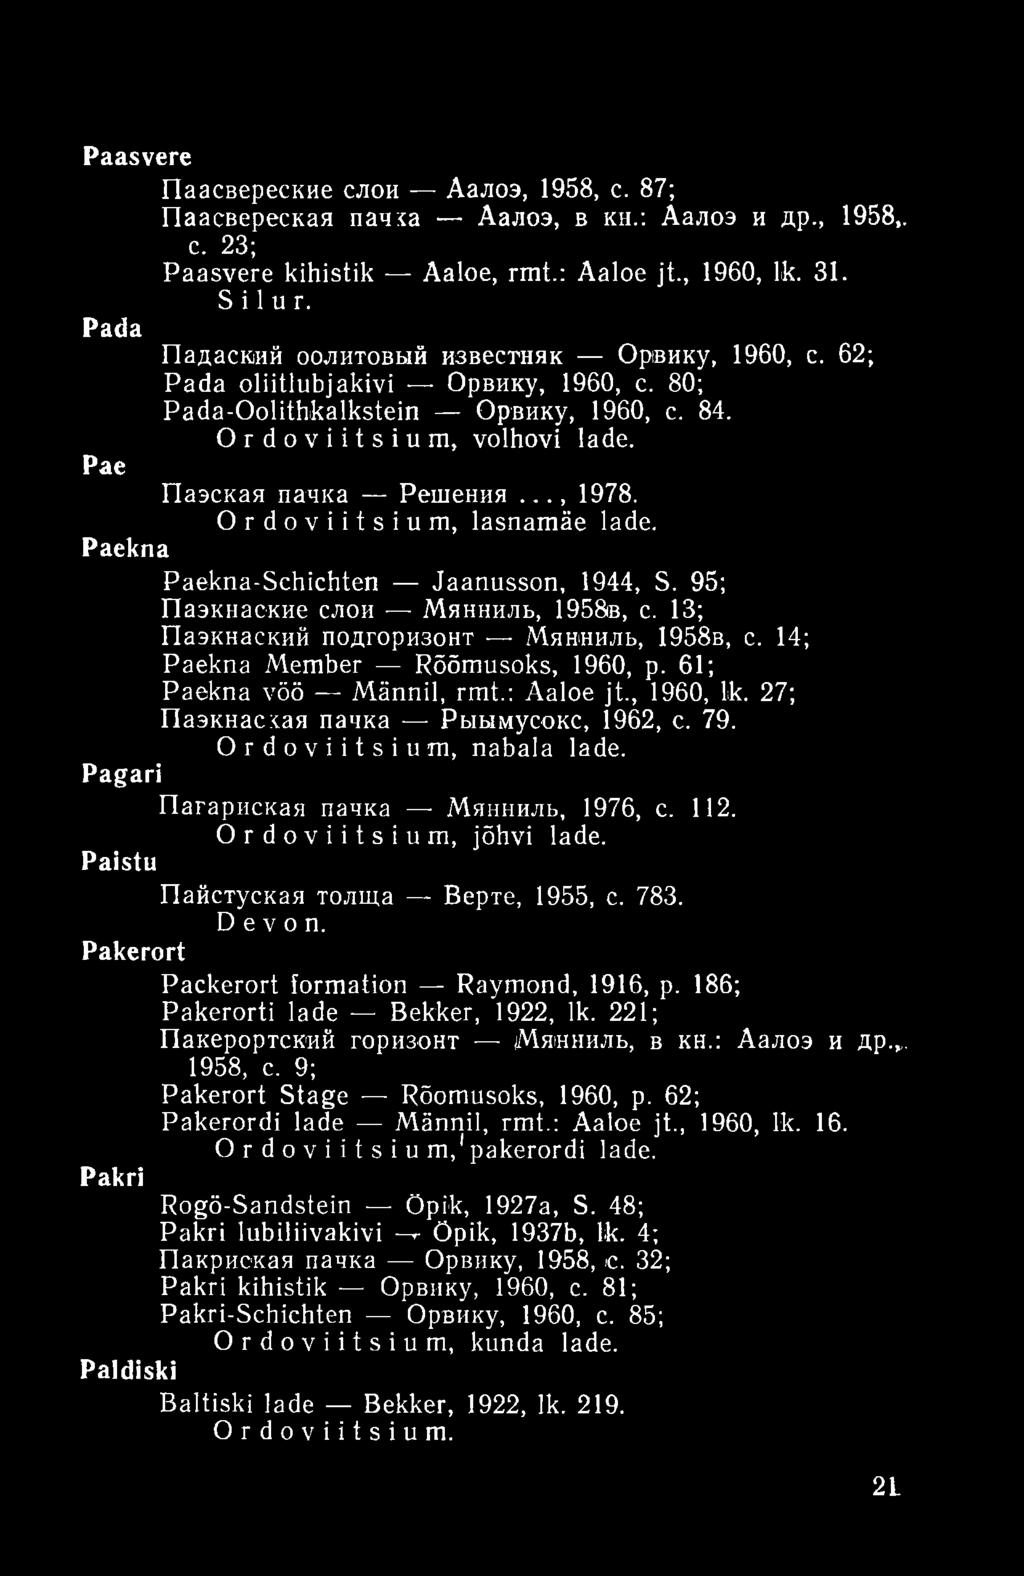 Ordoviitsium, lasnamäe lade. Paekna Paekna-Schichten Jaanusson, 1944, S. 95; Паэкнаские слои Мянниль, 1958в, с. 13; Паэкнаский подгоризонт Мянниль, 1958в, с. 14; Paekna Member Rõõmusoks, 1960, p.